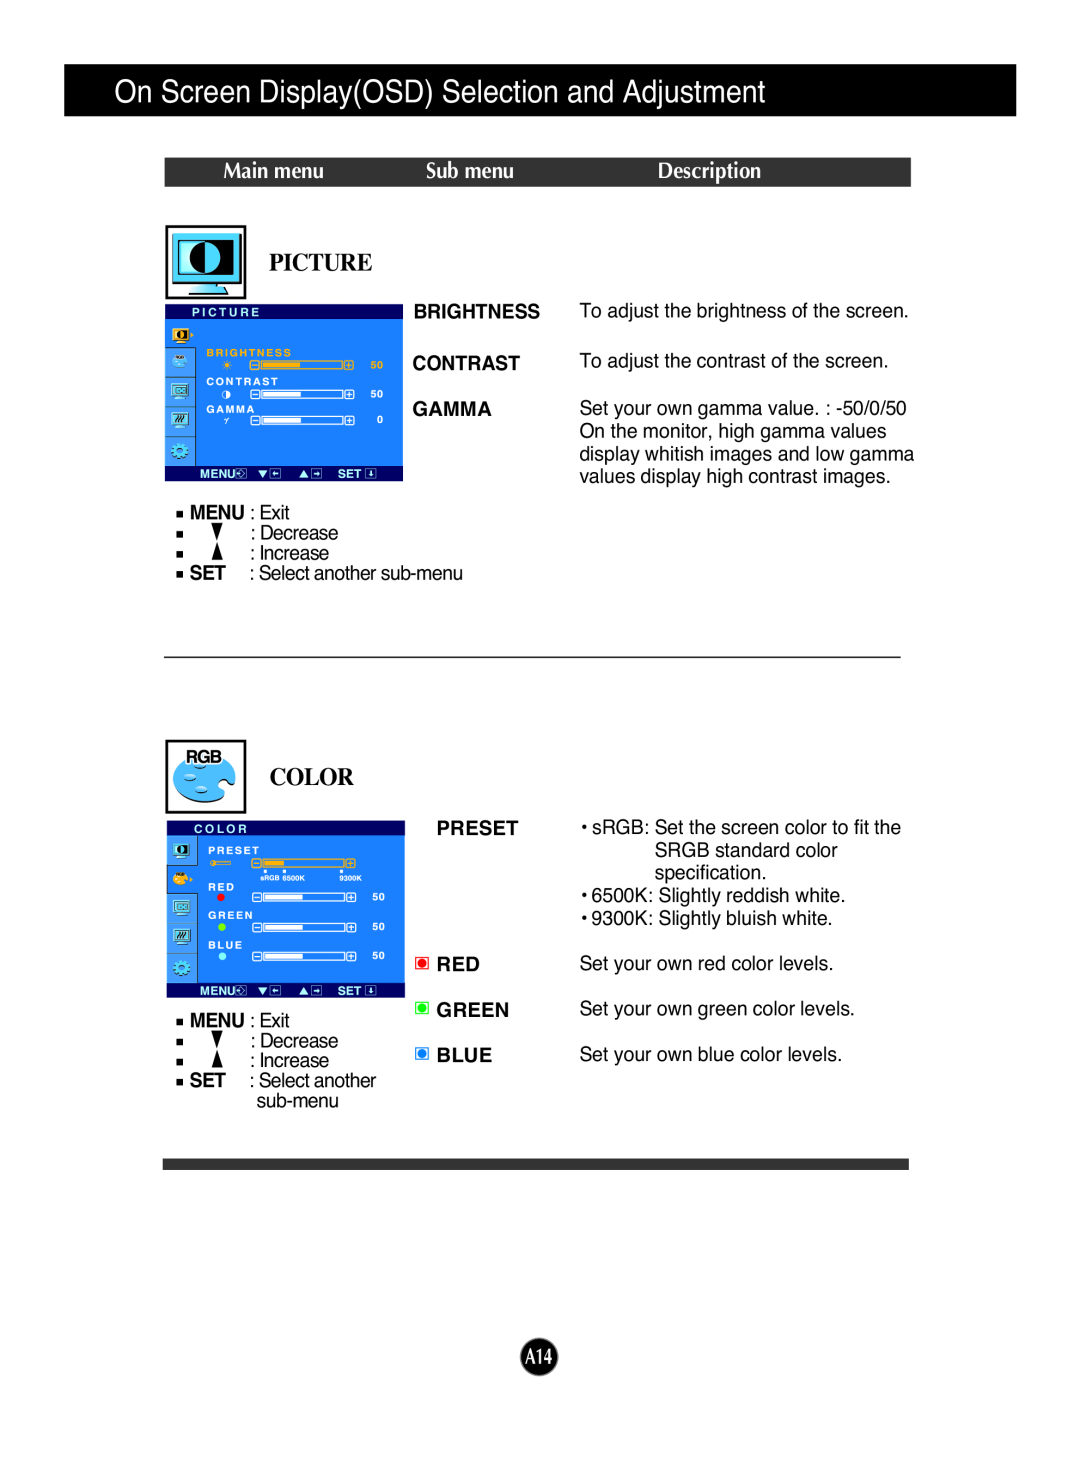 LG Electronics L204WS Picture, Color, Main menu, Sub menu, Description, On Screen DisplayOSD Selection and Adjustment 